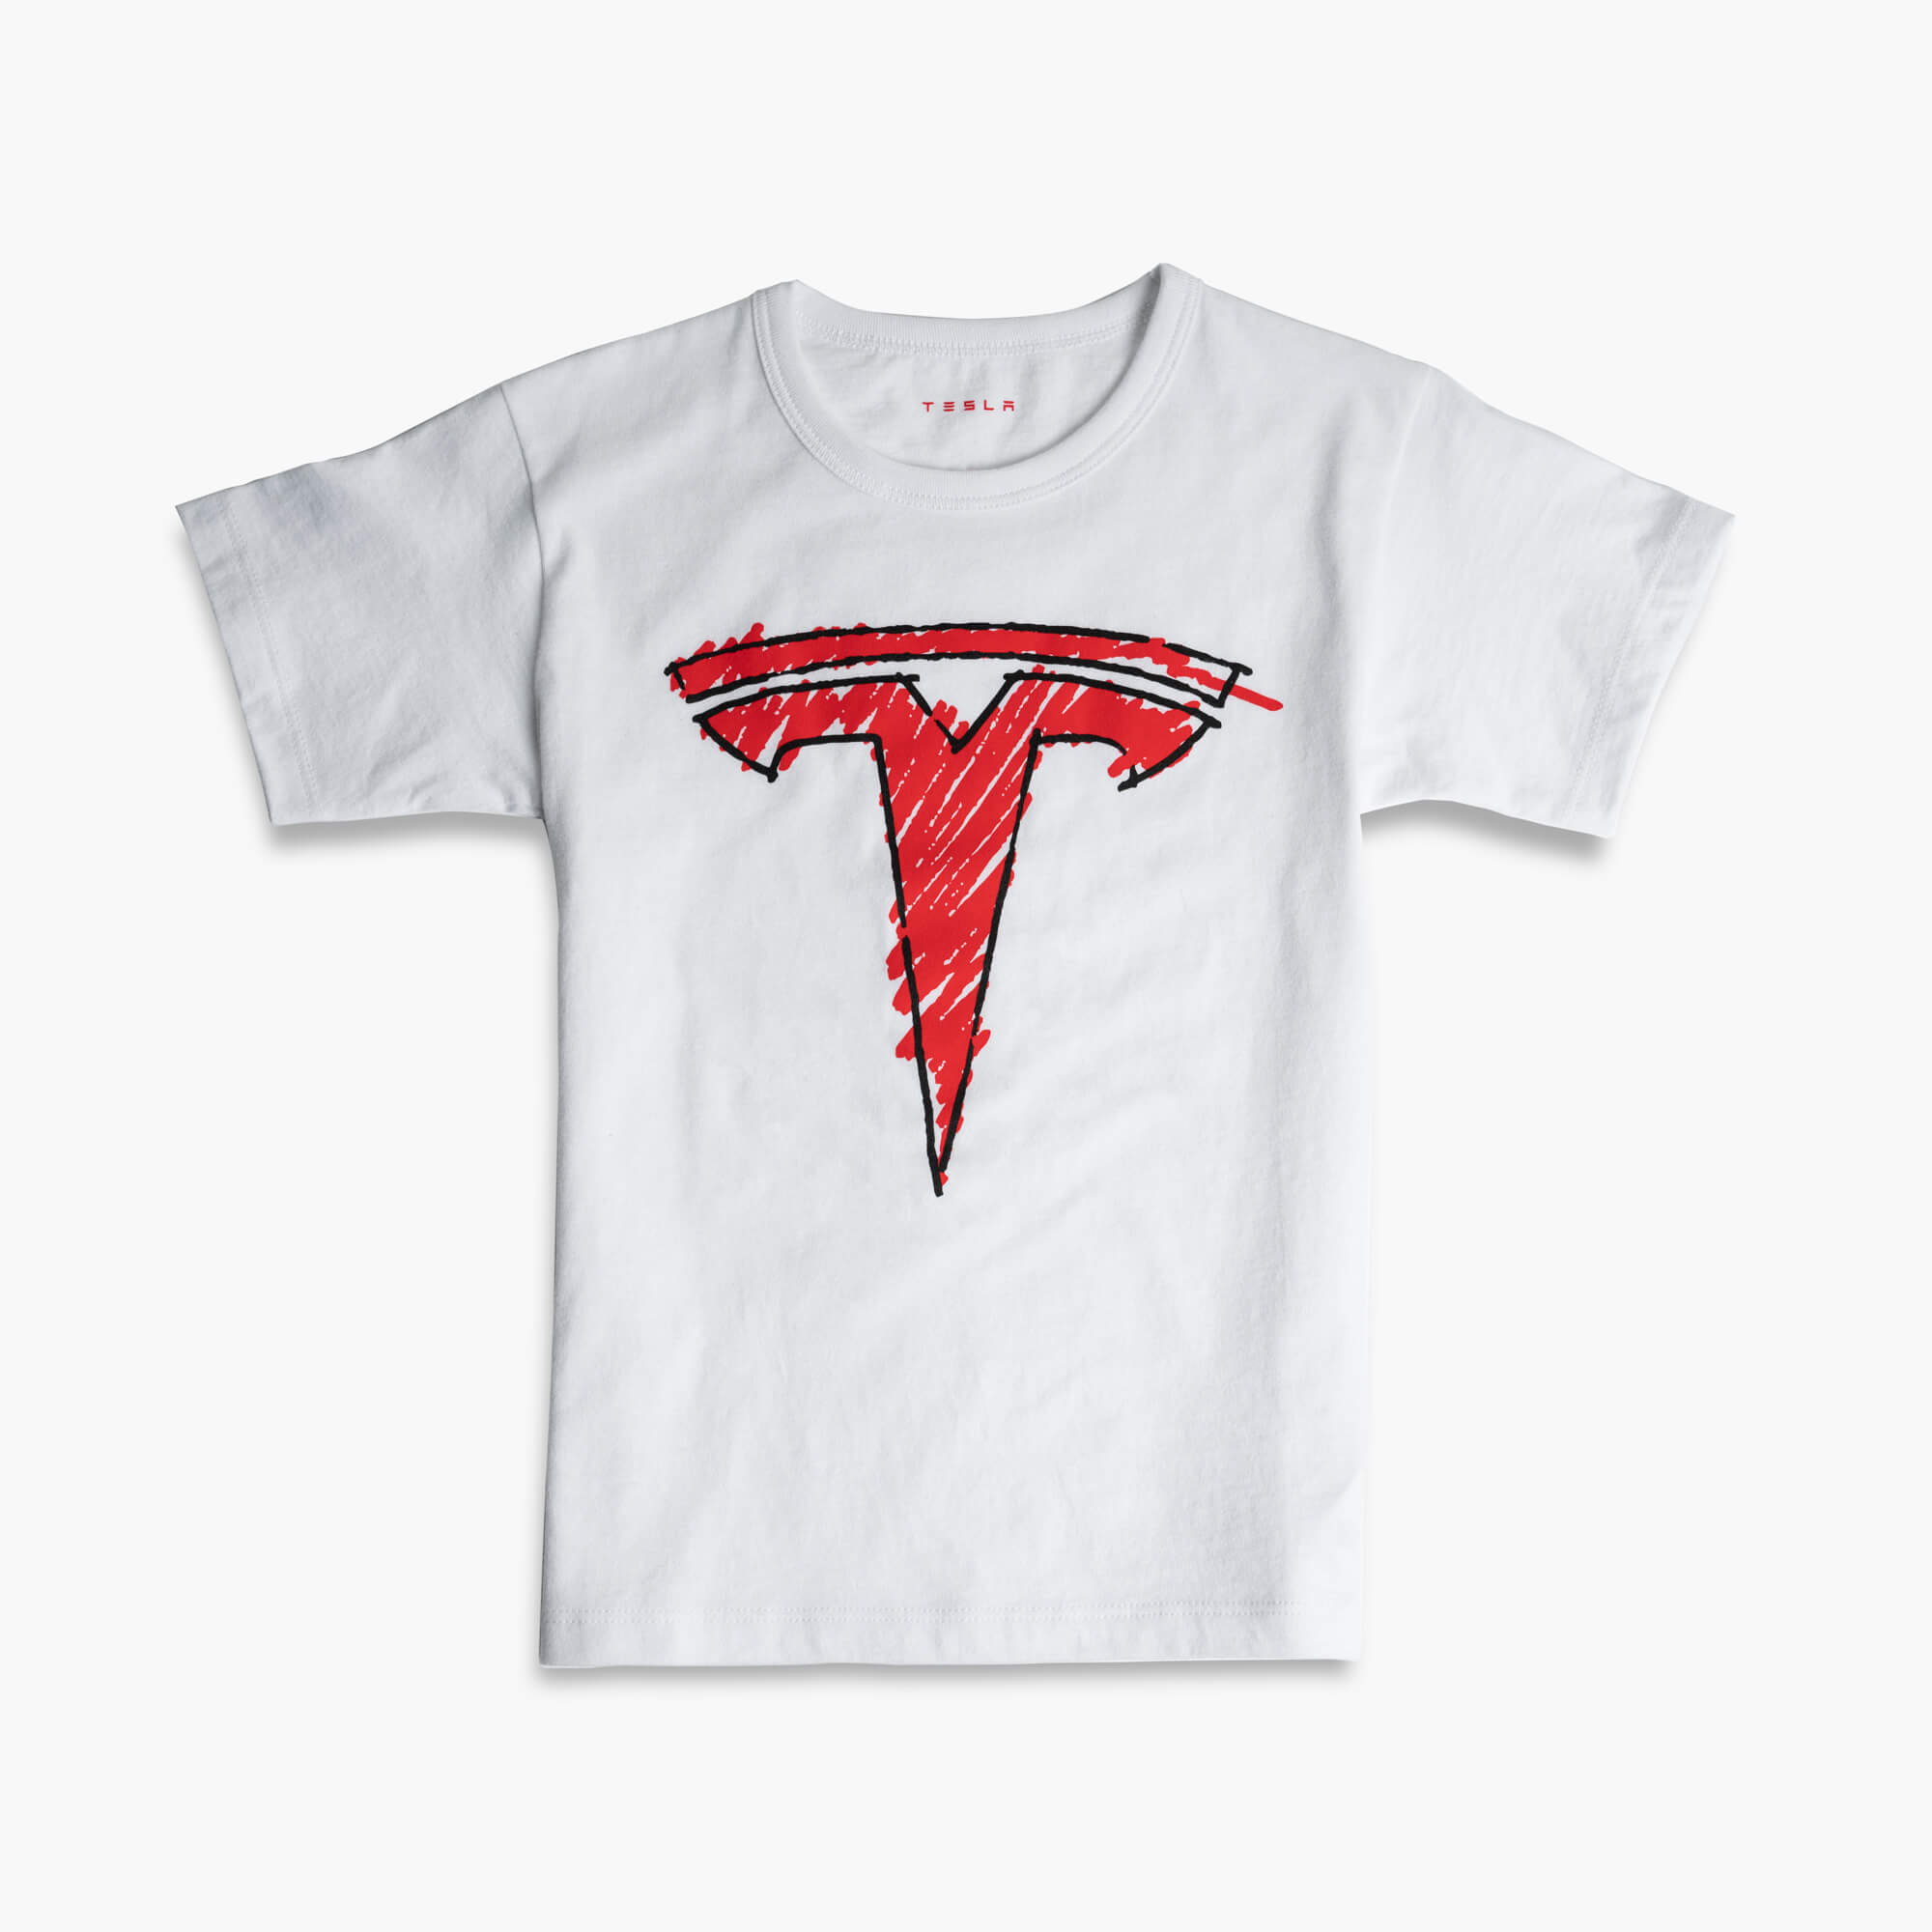 兒童手繪風Tesla T logo T恤